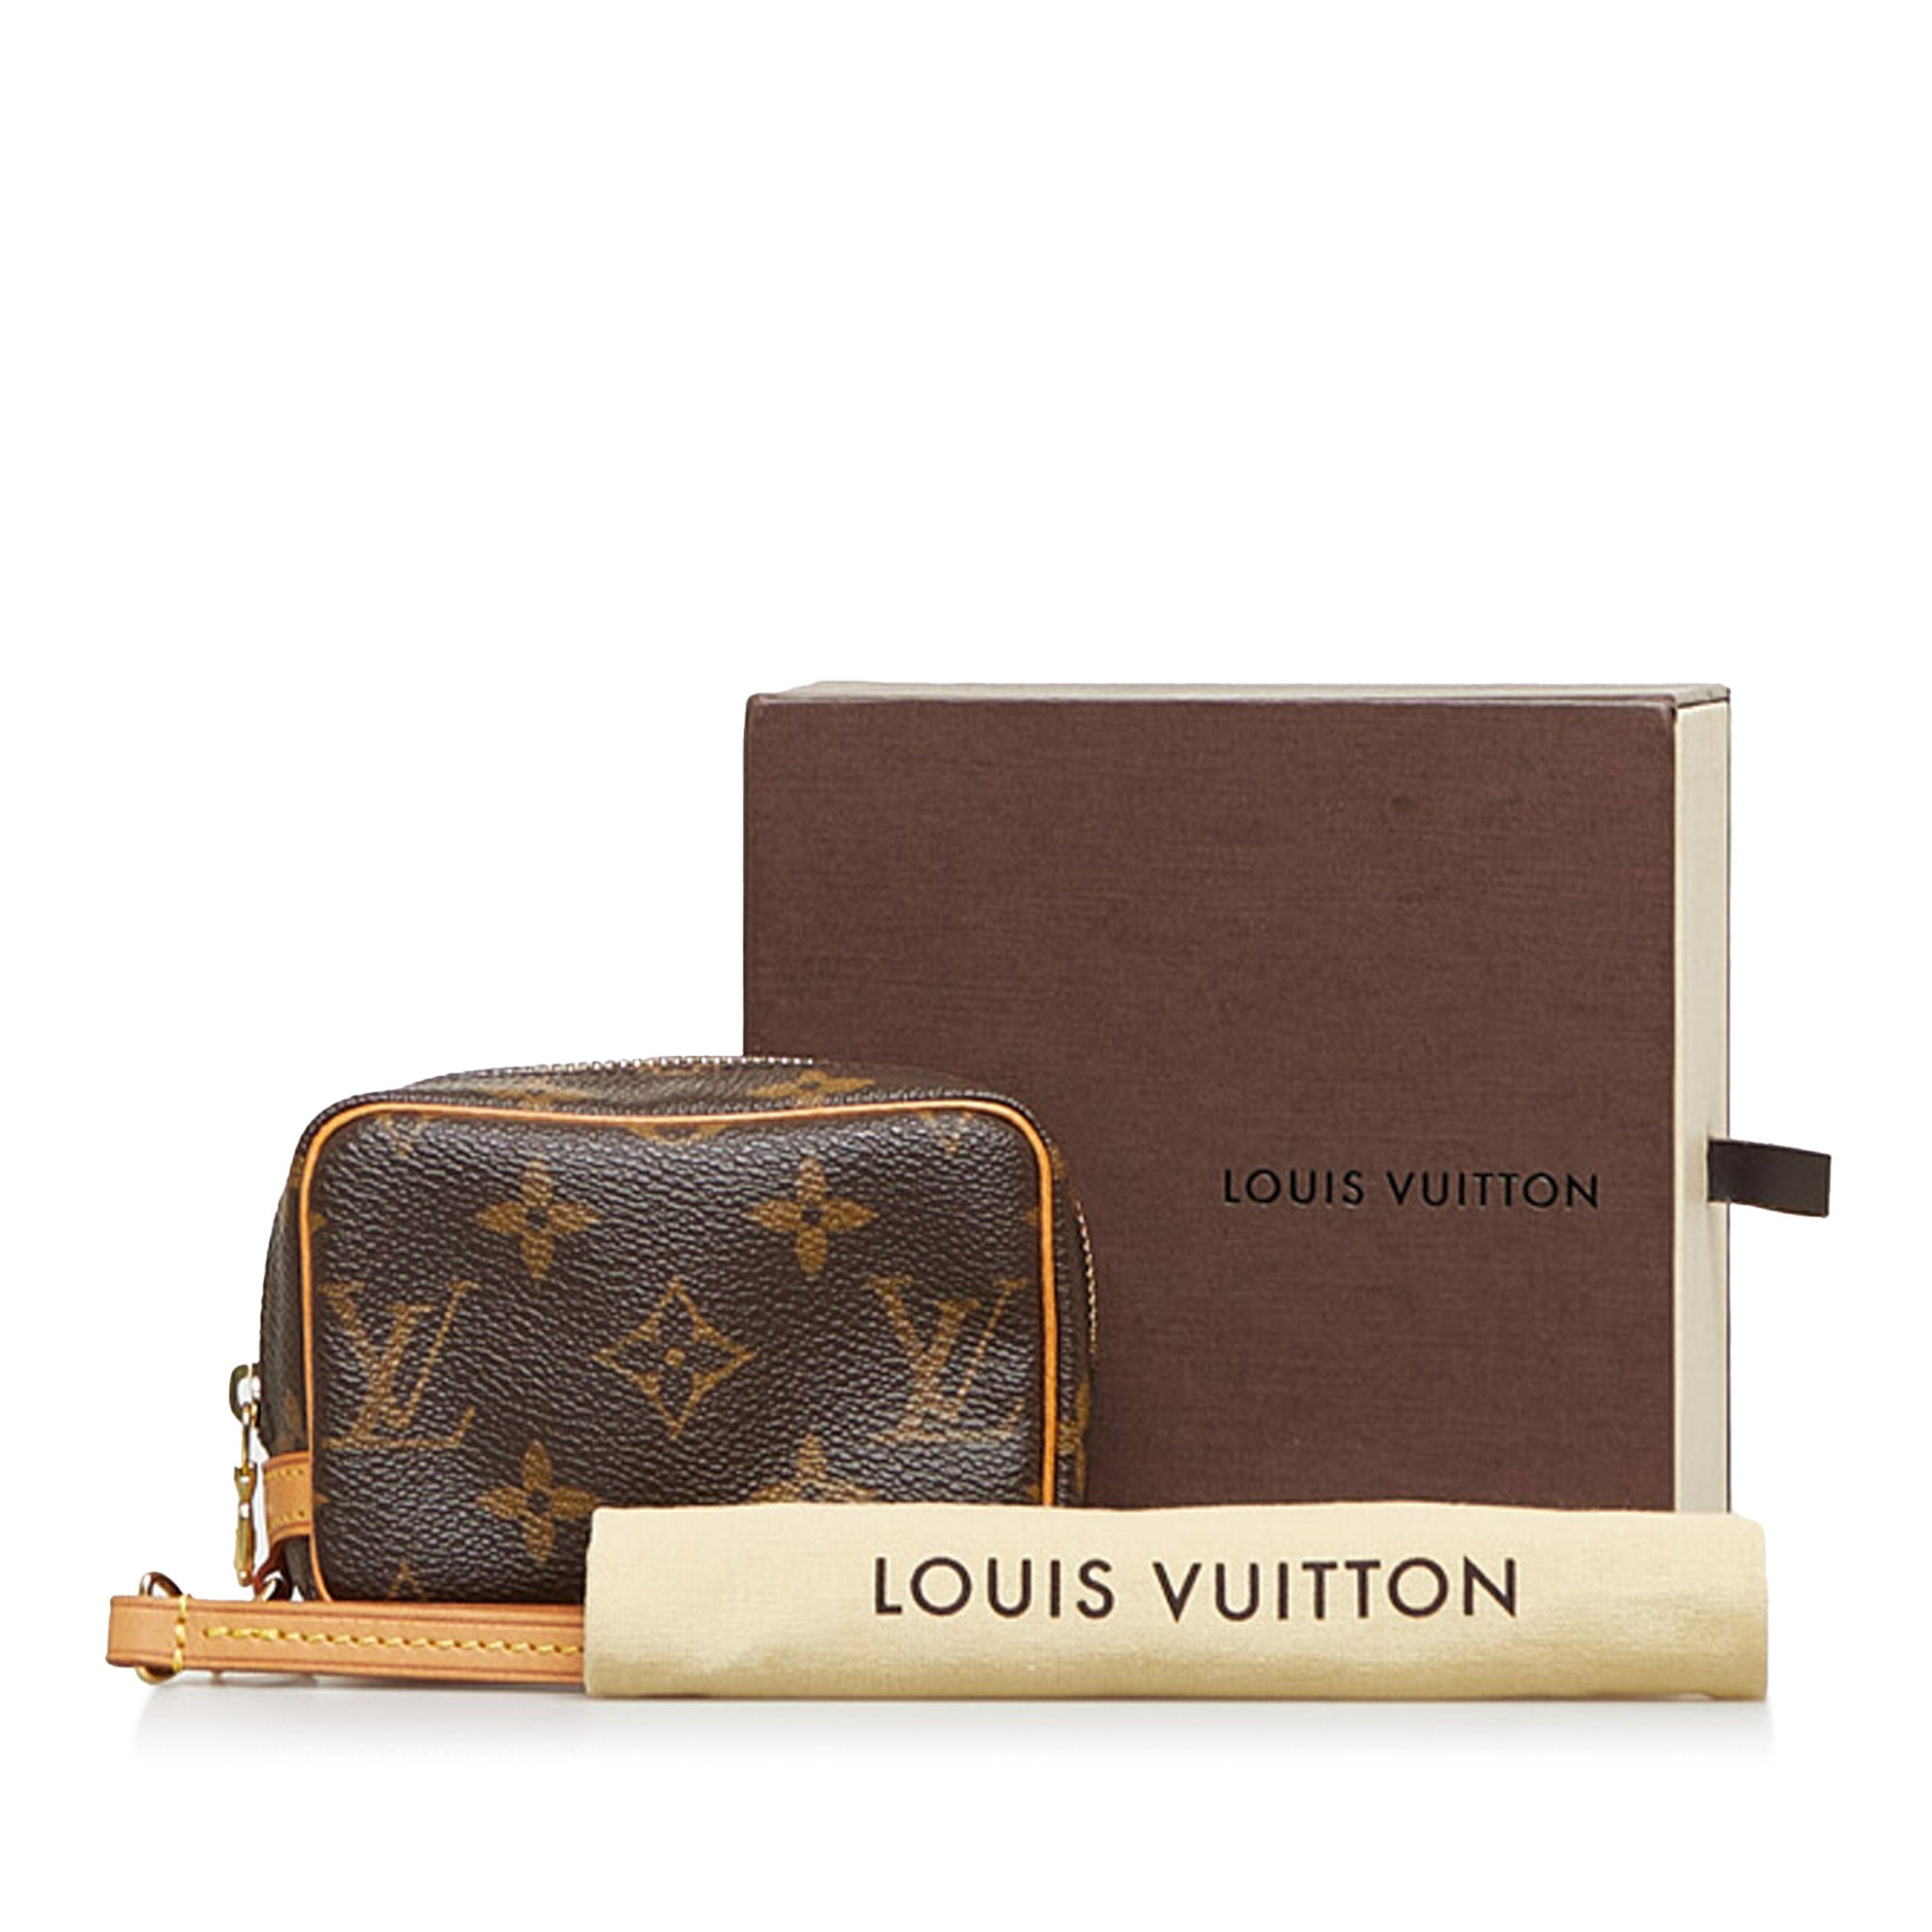 Louis Vuitton Louis Vuitton Trousse Wapity Monogram Canvas Wristlet